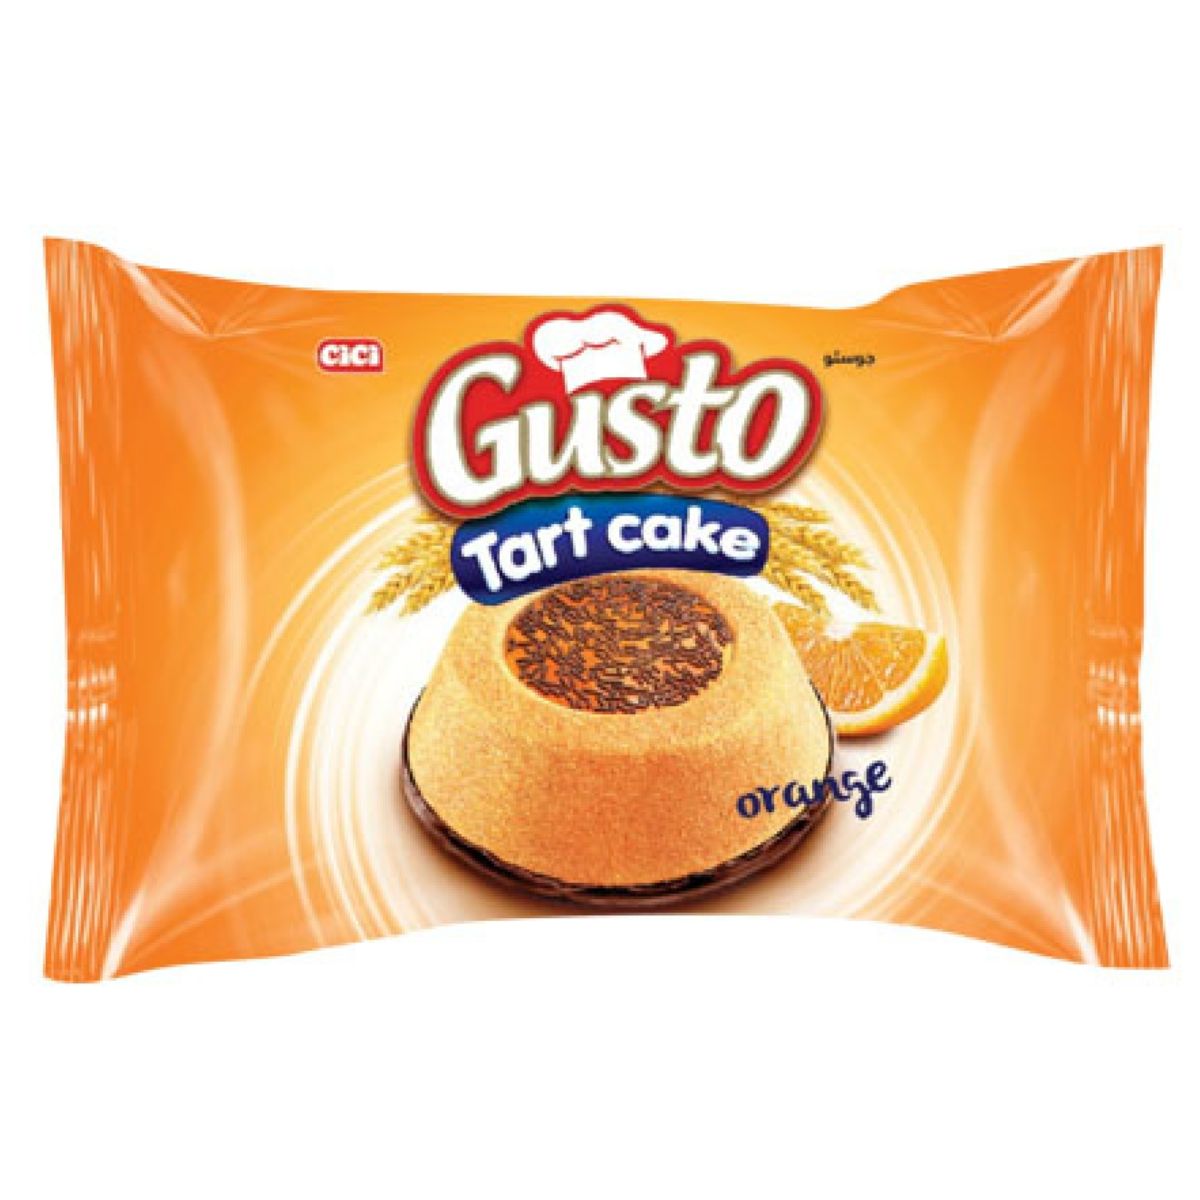 A bag of Gusto - Tart Cake Orange Jelly Cream - 45g on a white background.